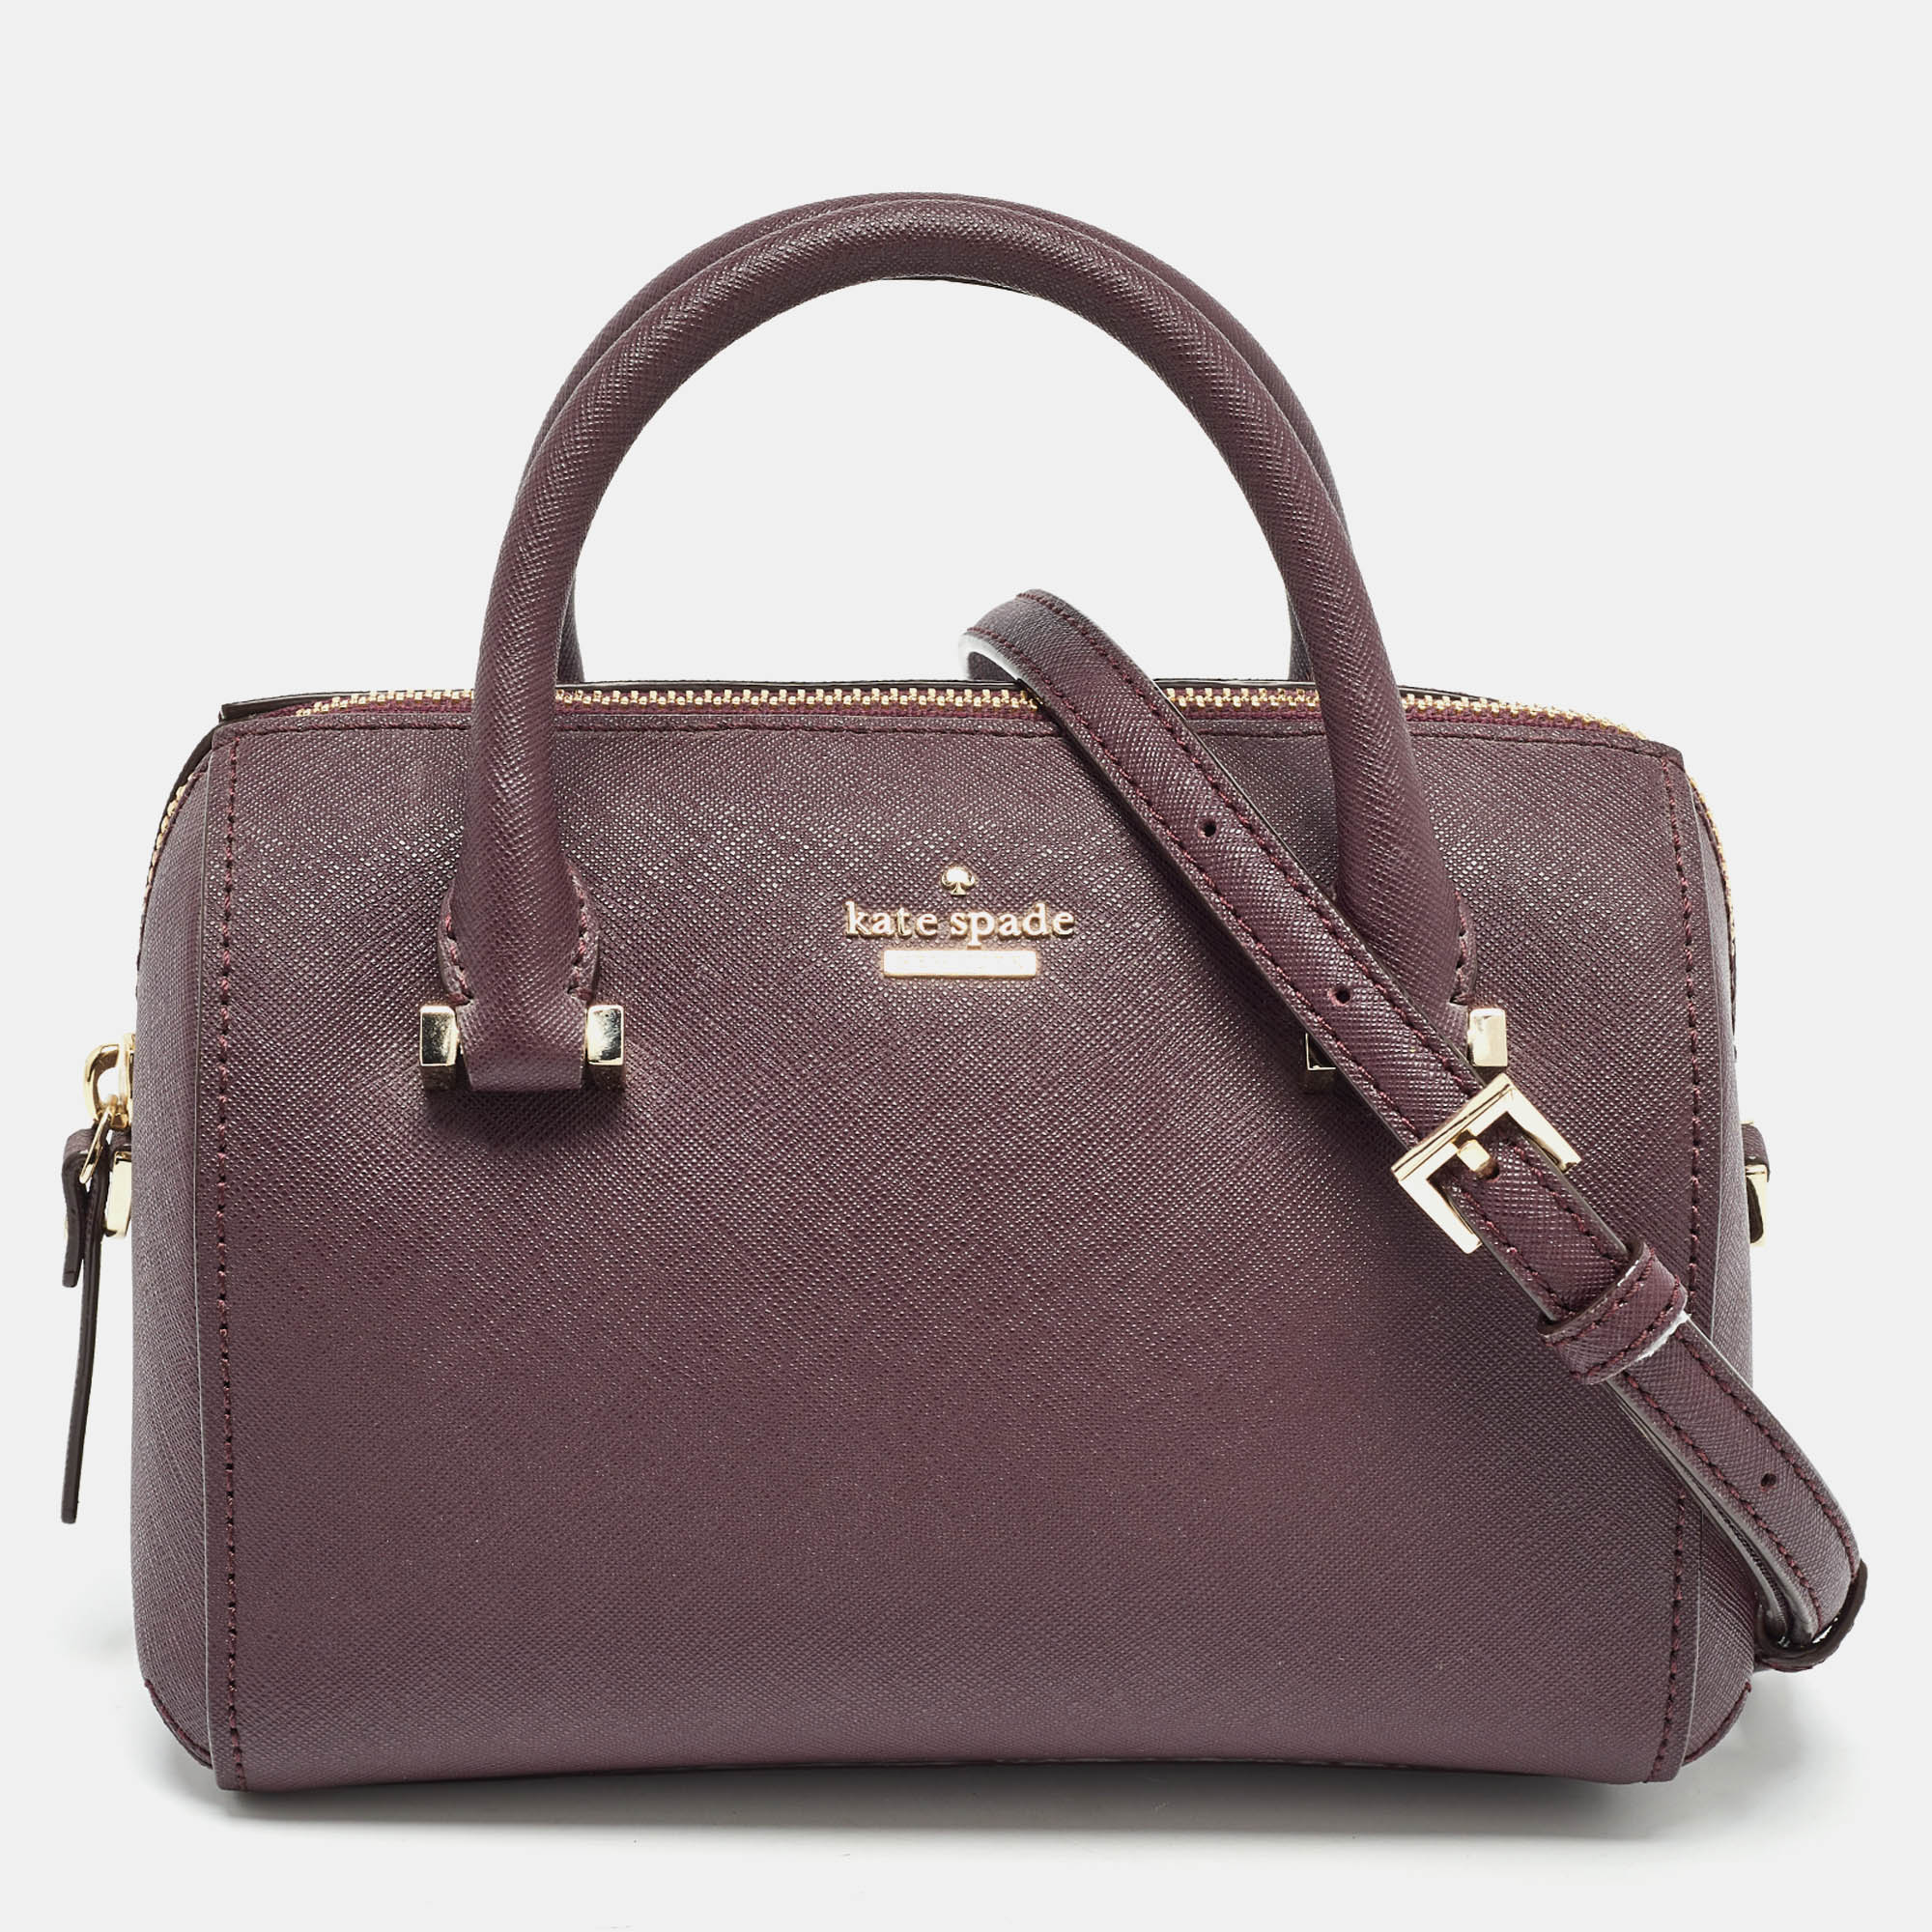 Kate spade burgundy leather cameron street lane satchel